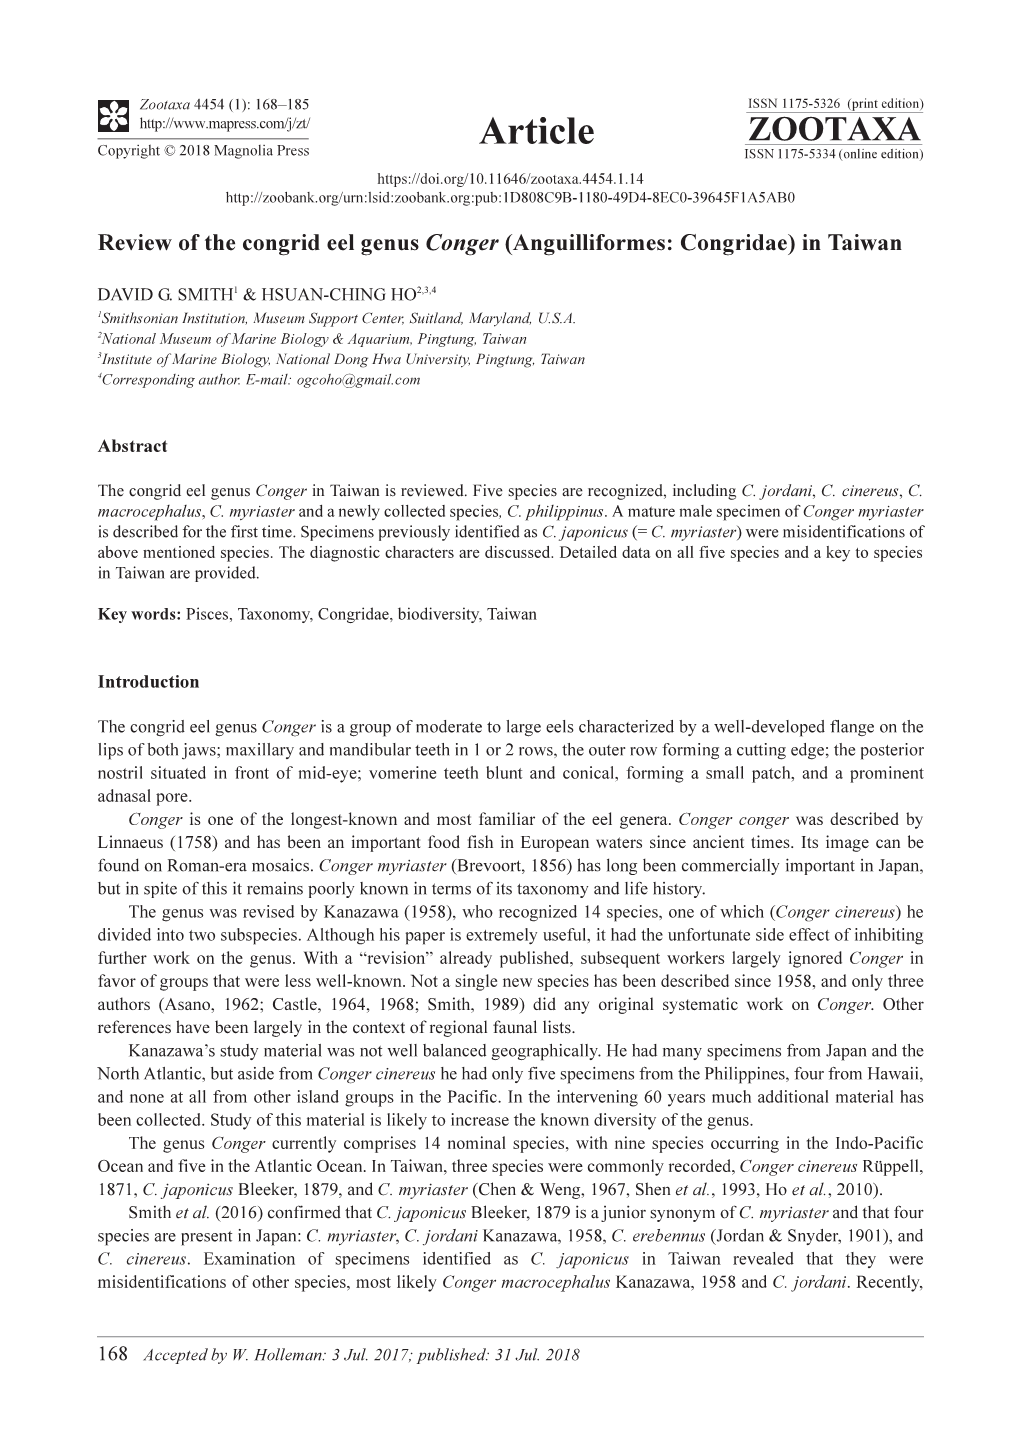 Review of the Congrid Eel Genus Conger (Anguilliformes: Congridae) in Taiwan